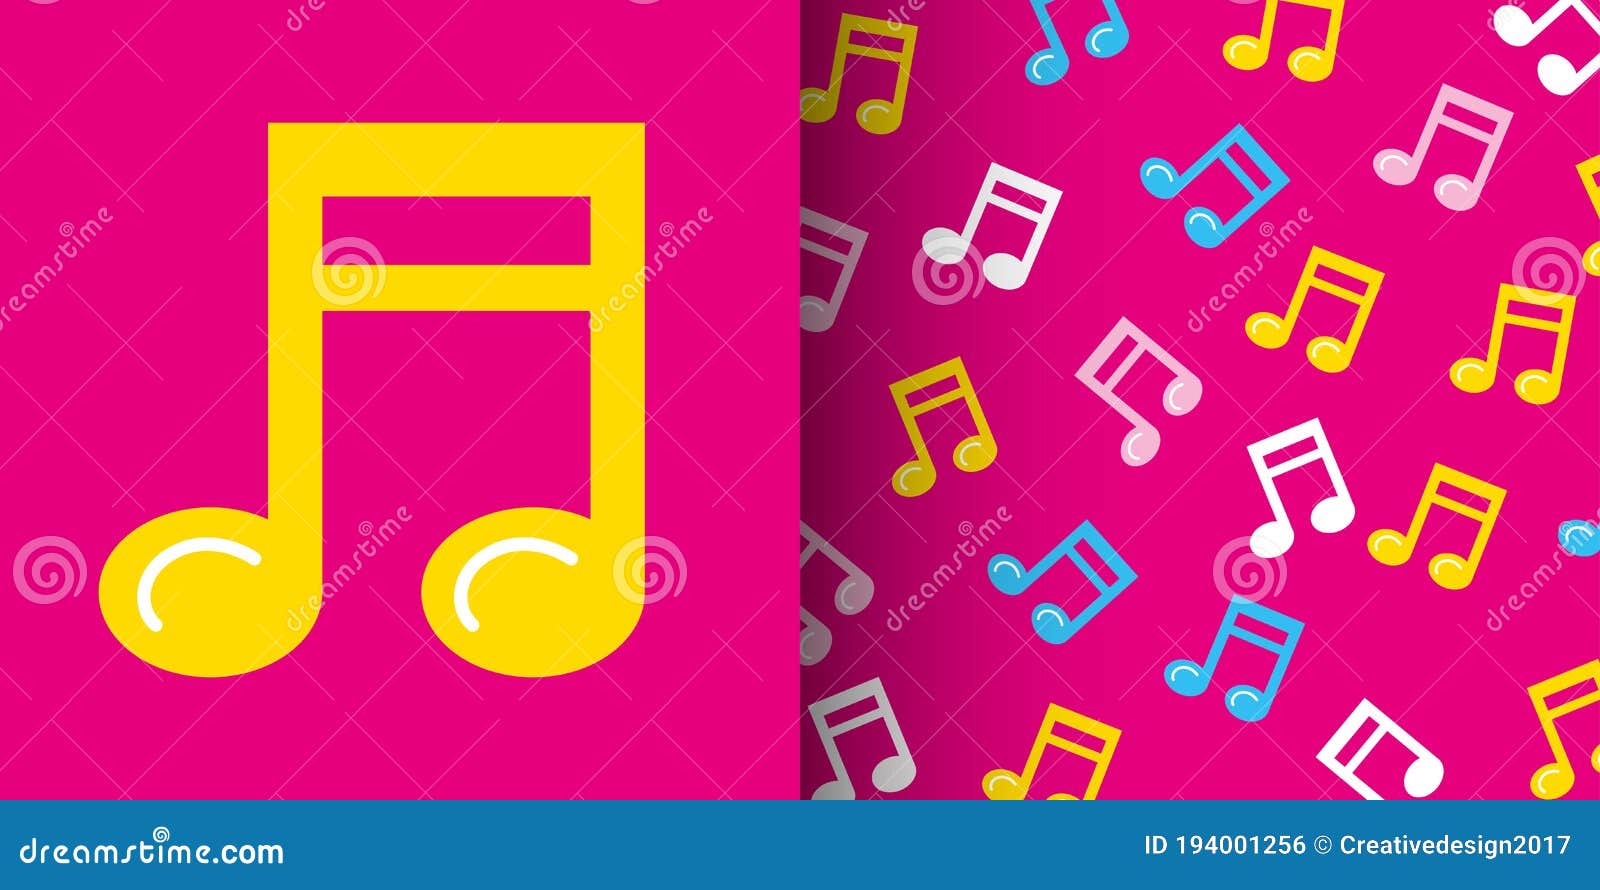 quaver musical note icon. 